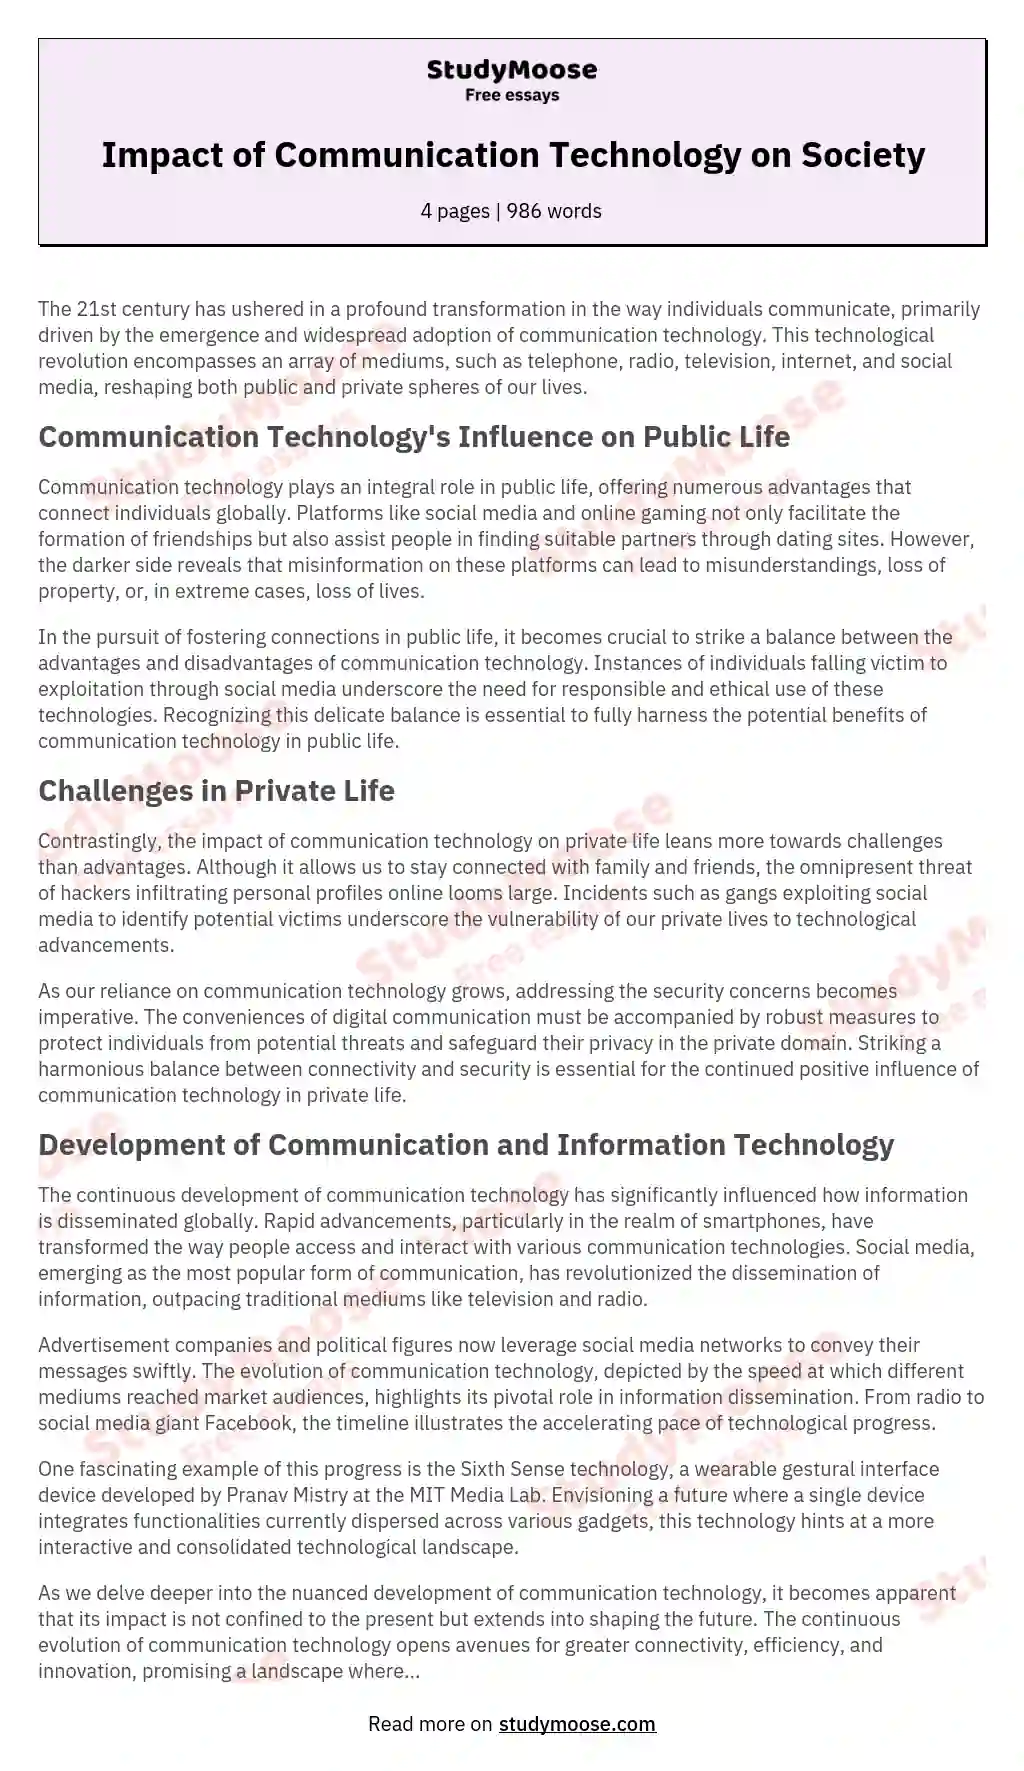 Impact of Communication Technology on Society essay